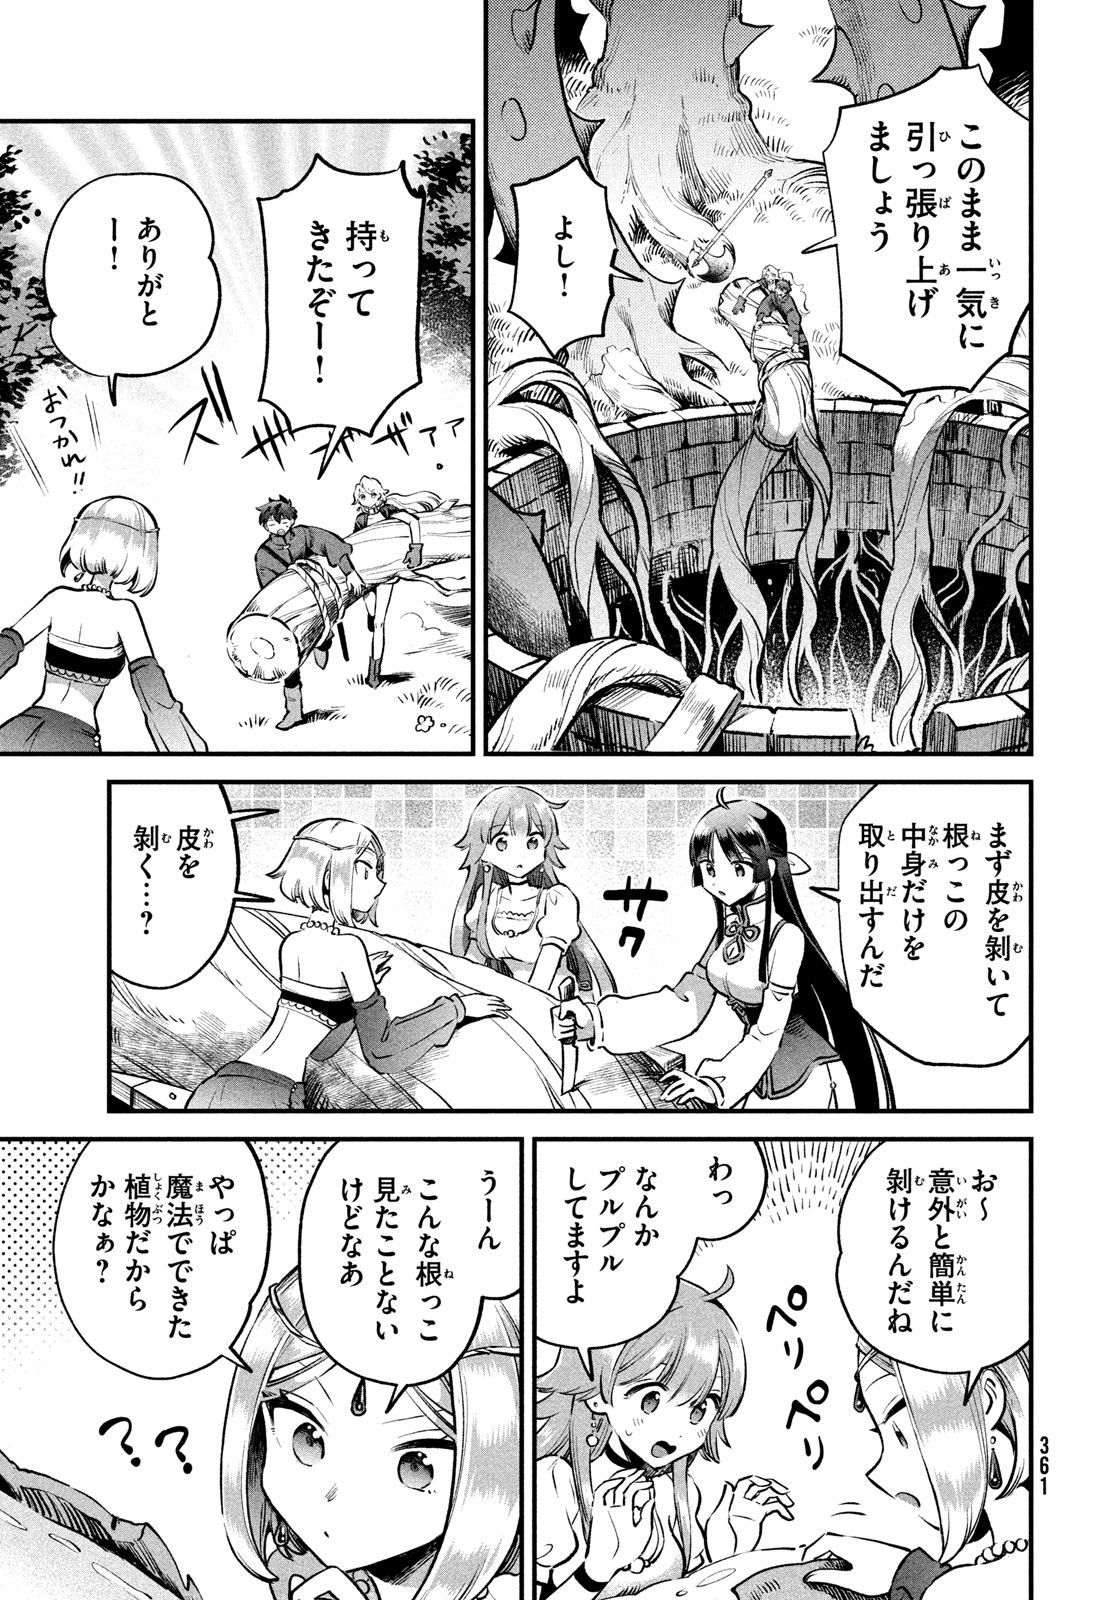 7-nin no Nemuri Hime - Chapter 45 - Page 7